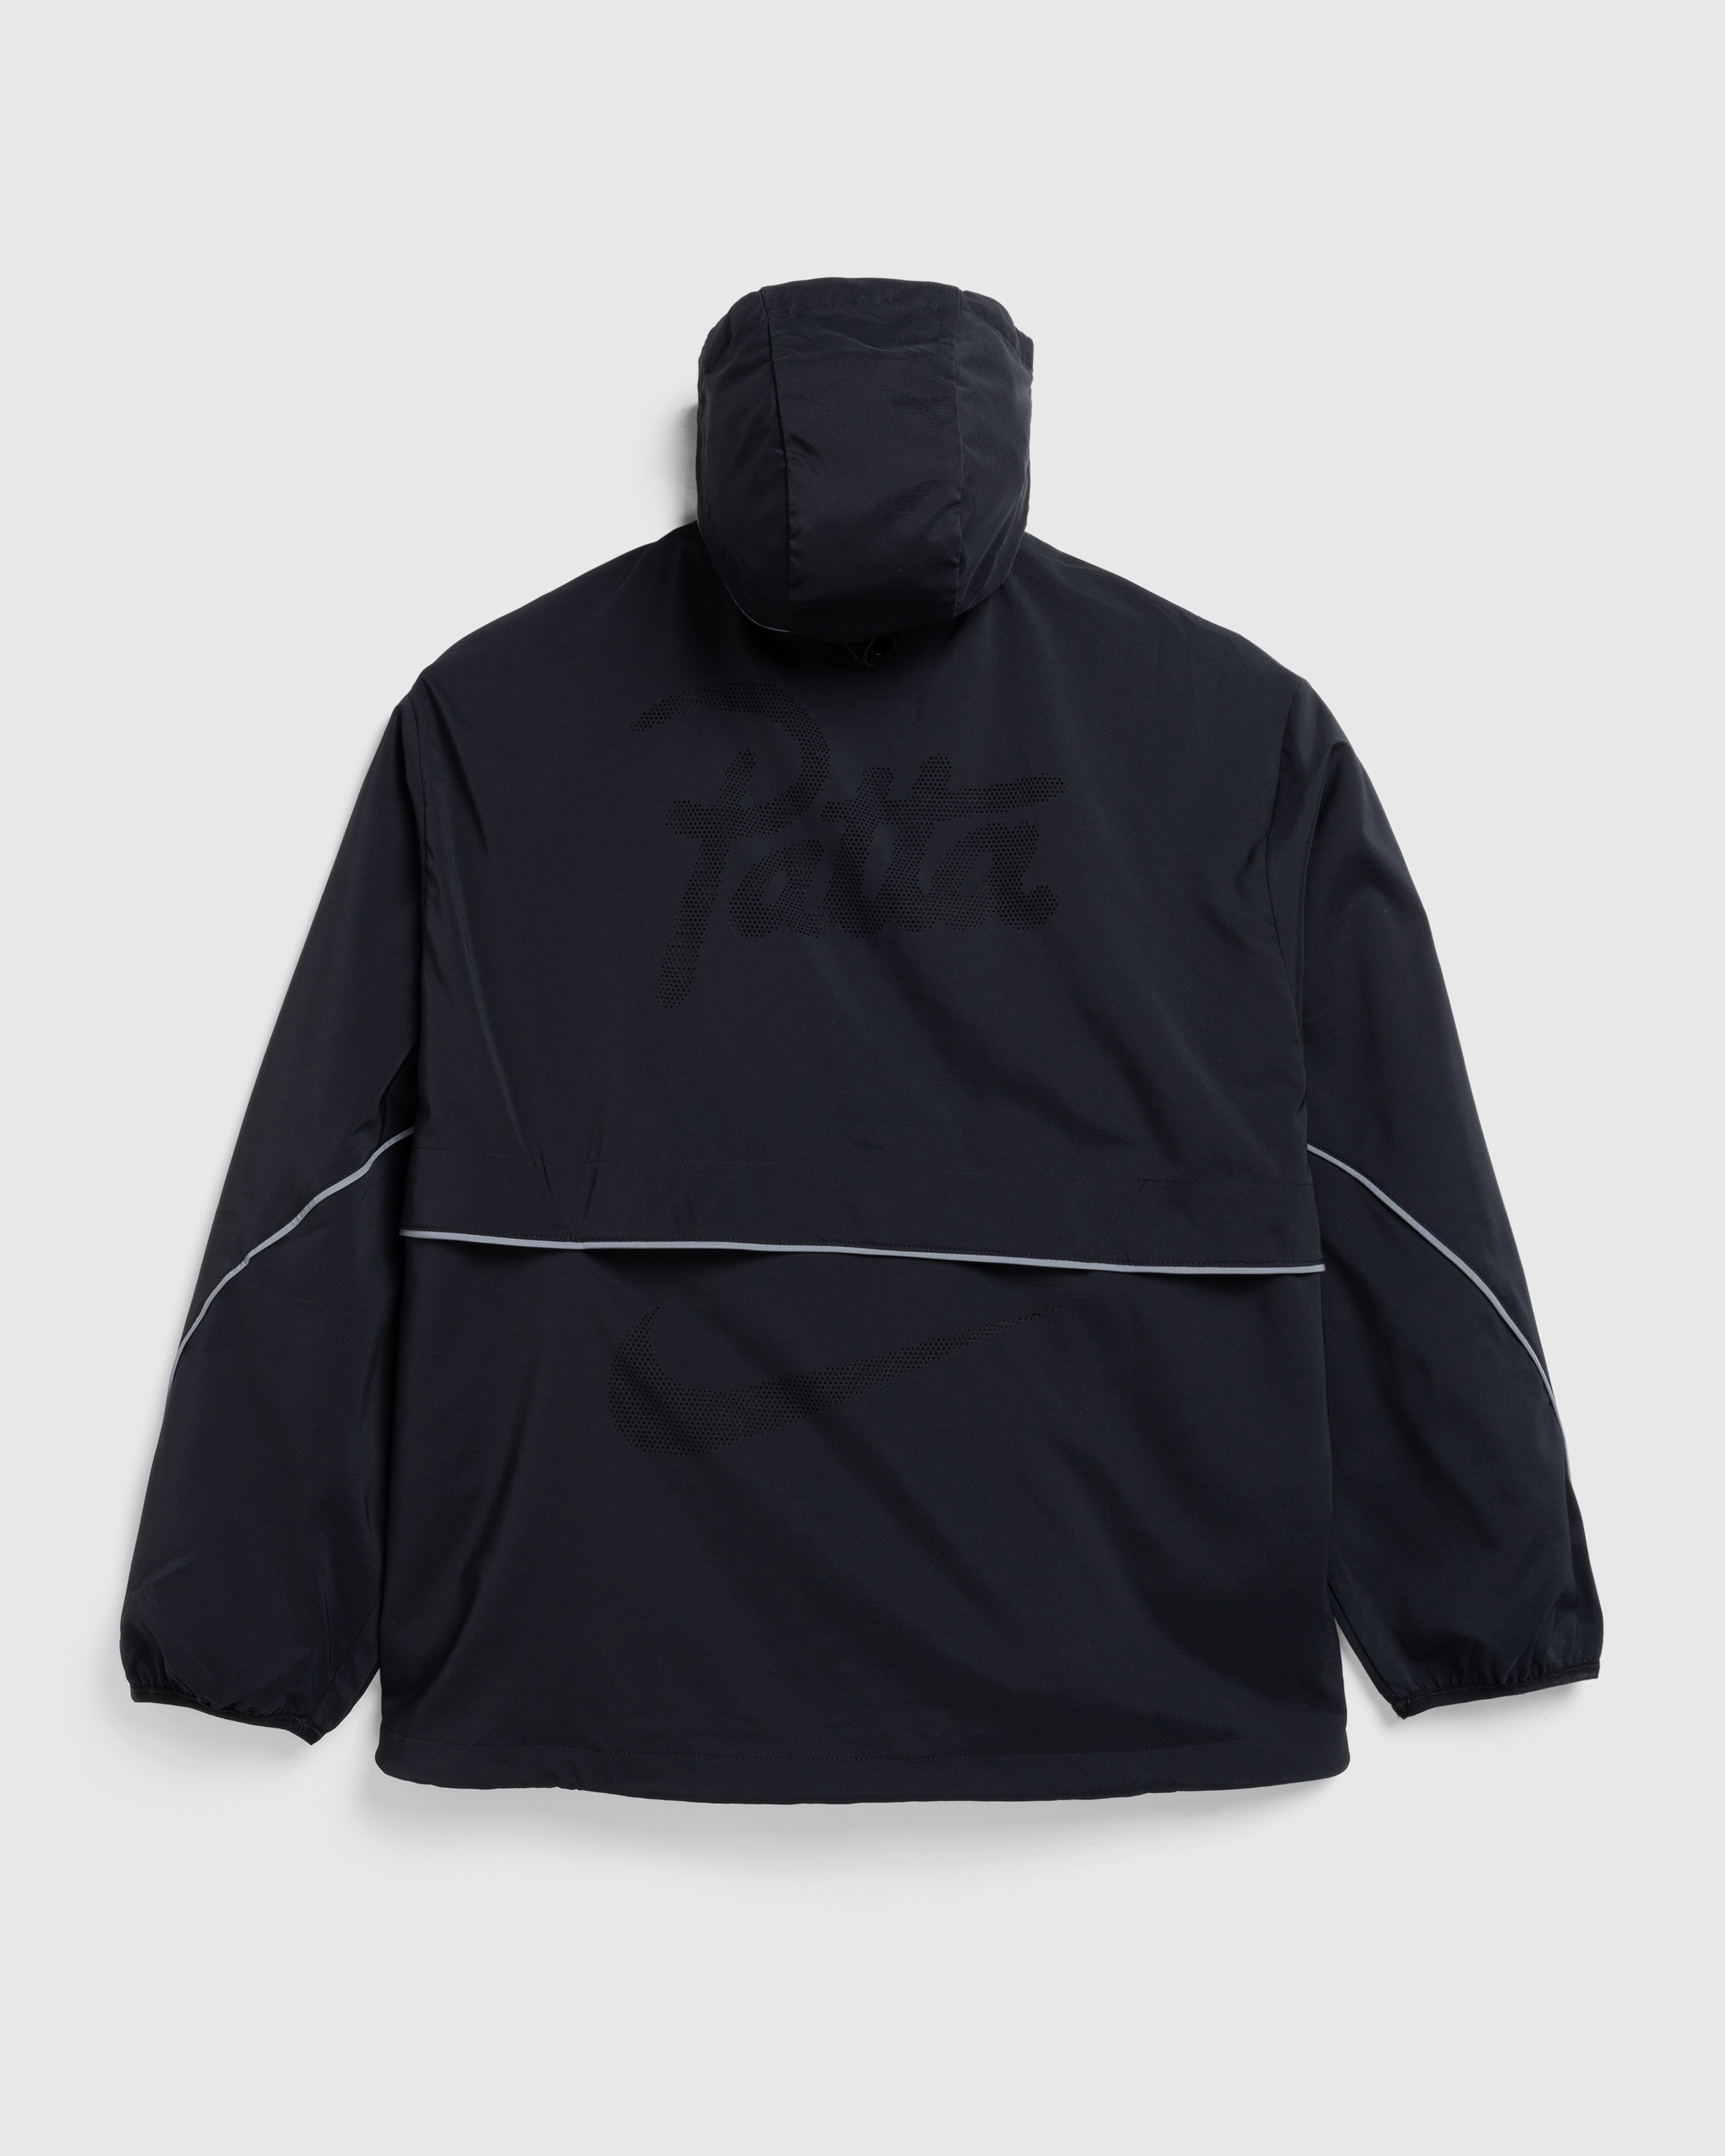 Nike x Patta – Men's Full-Zip Jacket Black - Jackets - Black - Image 6